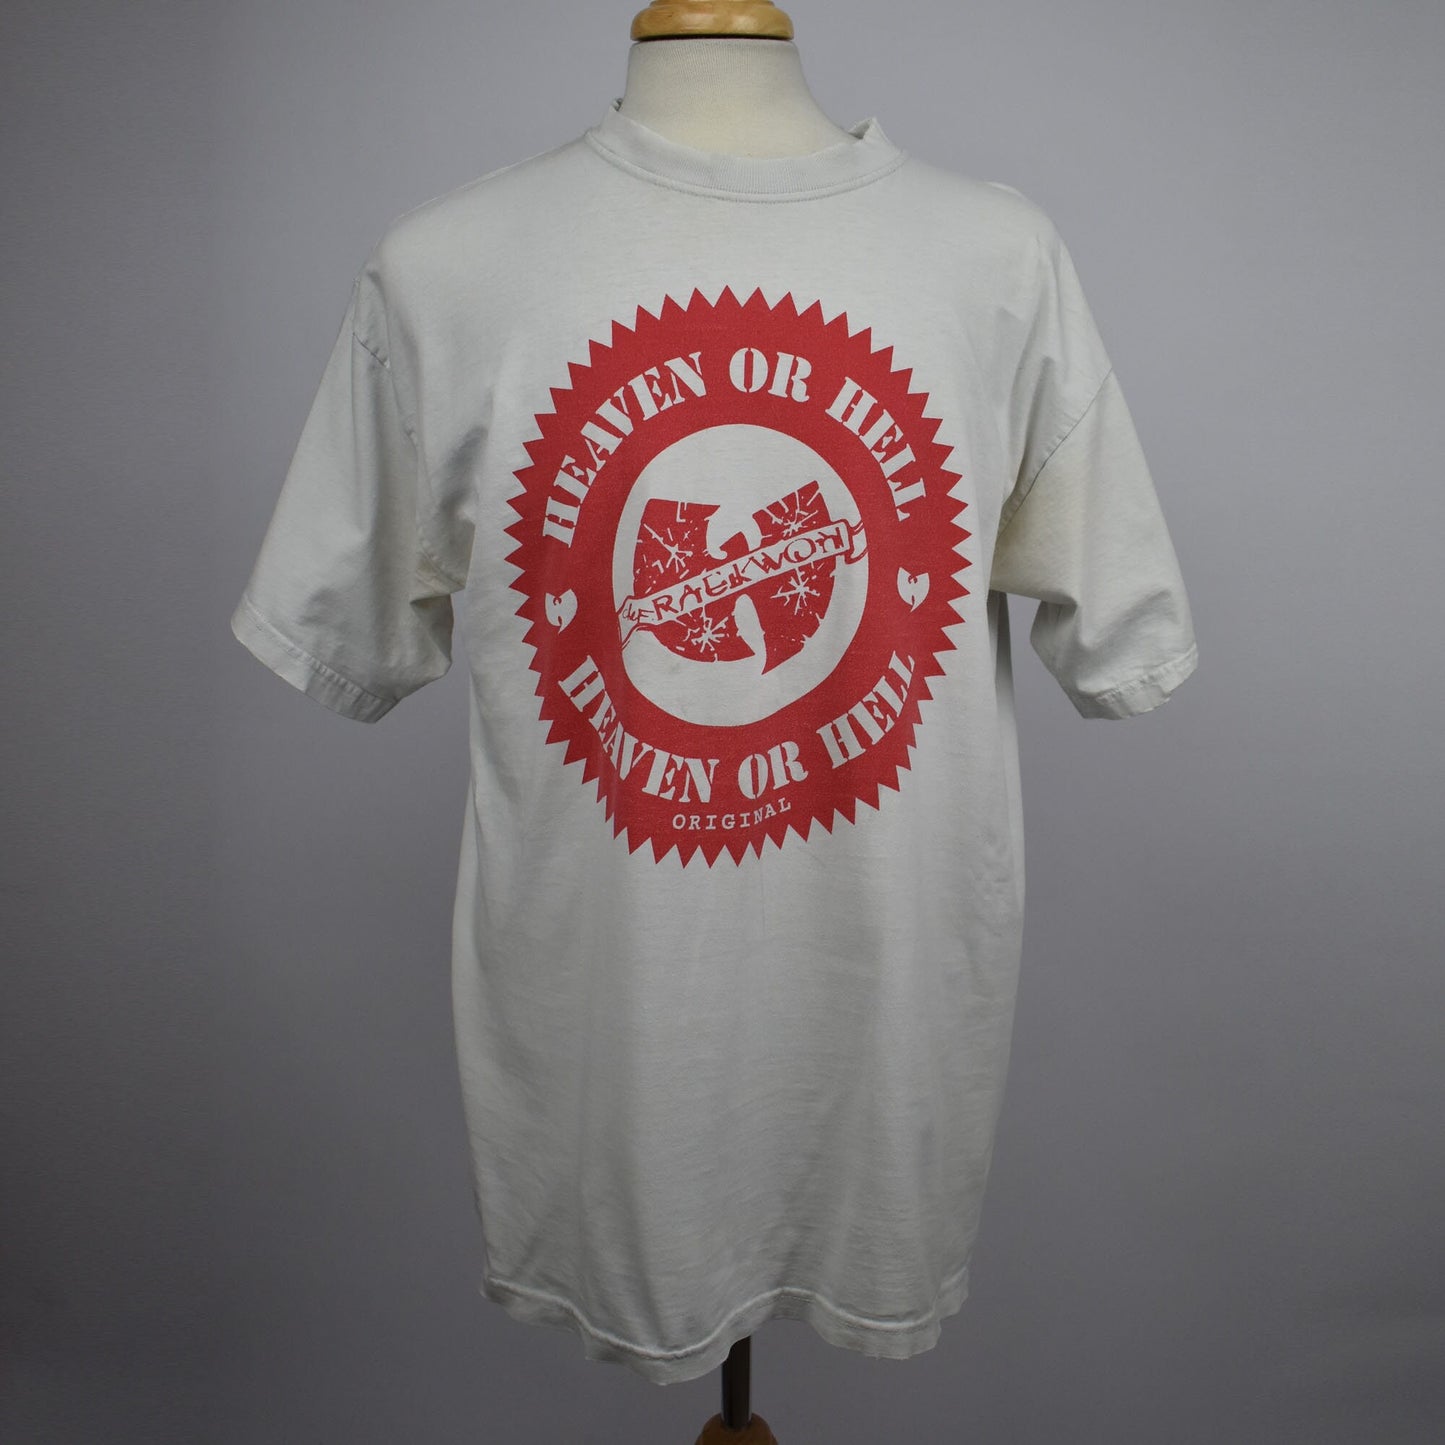 Vintage 90s Wu Tang Clan Wu Wear Raekwon The Chef "Heaven Or Hell" T-shirt